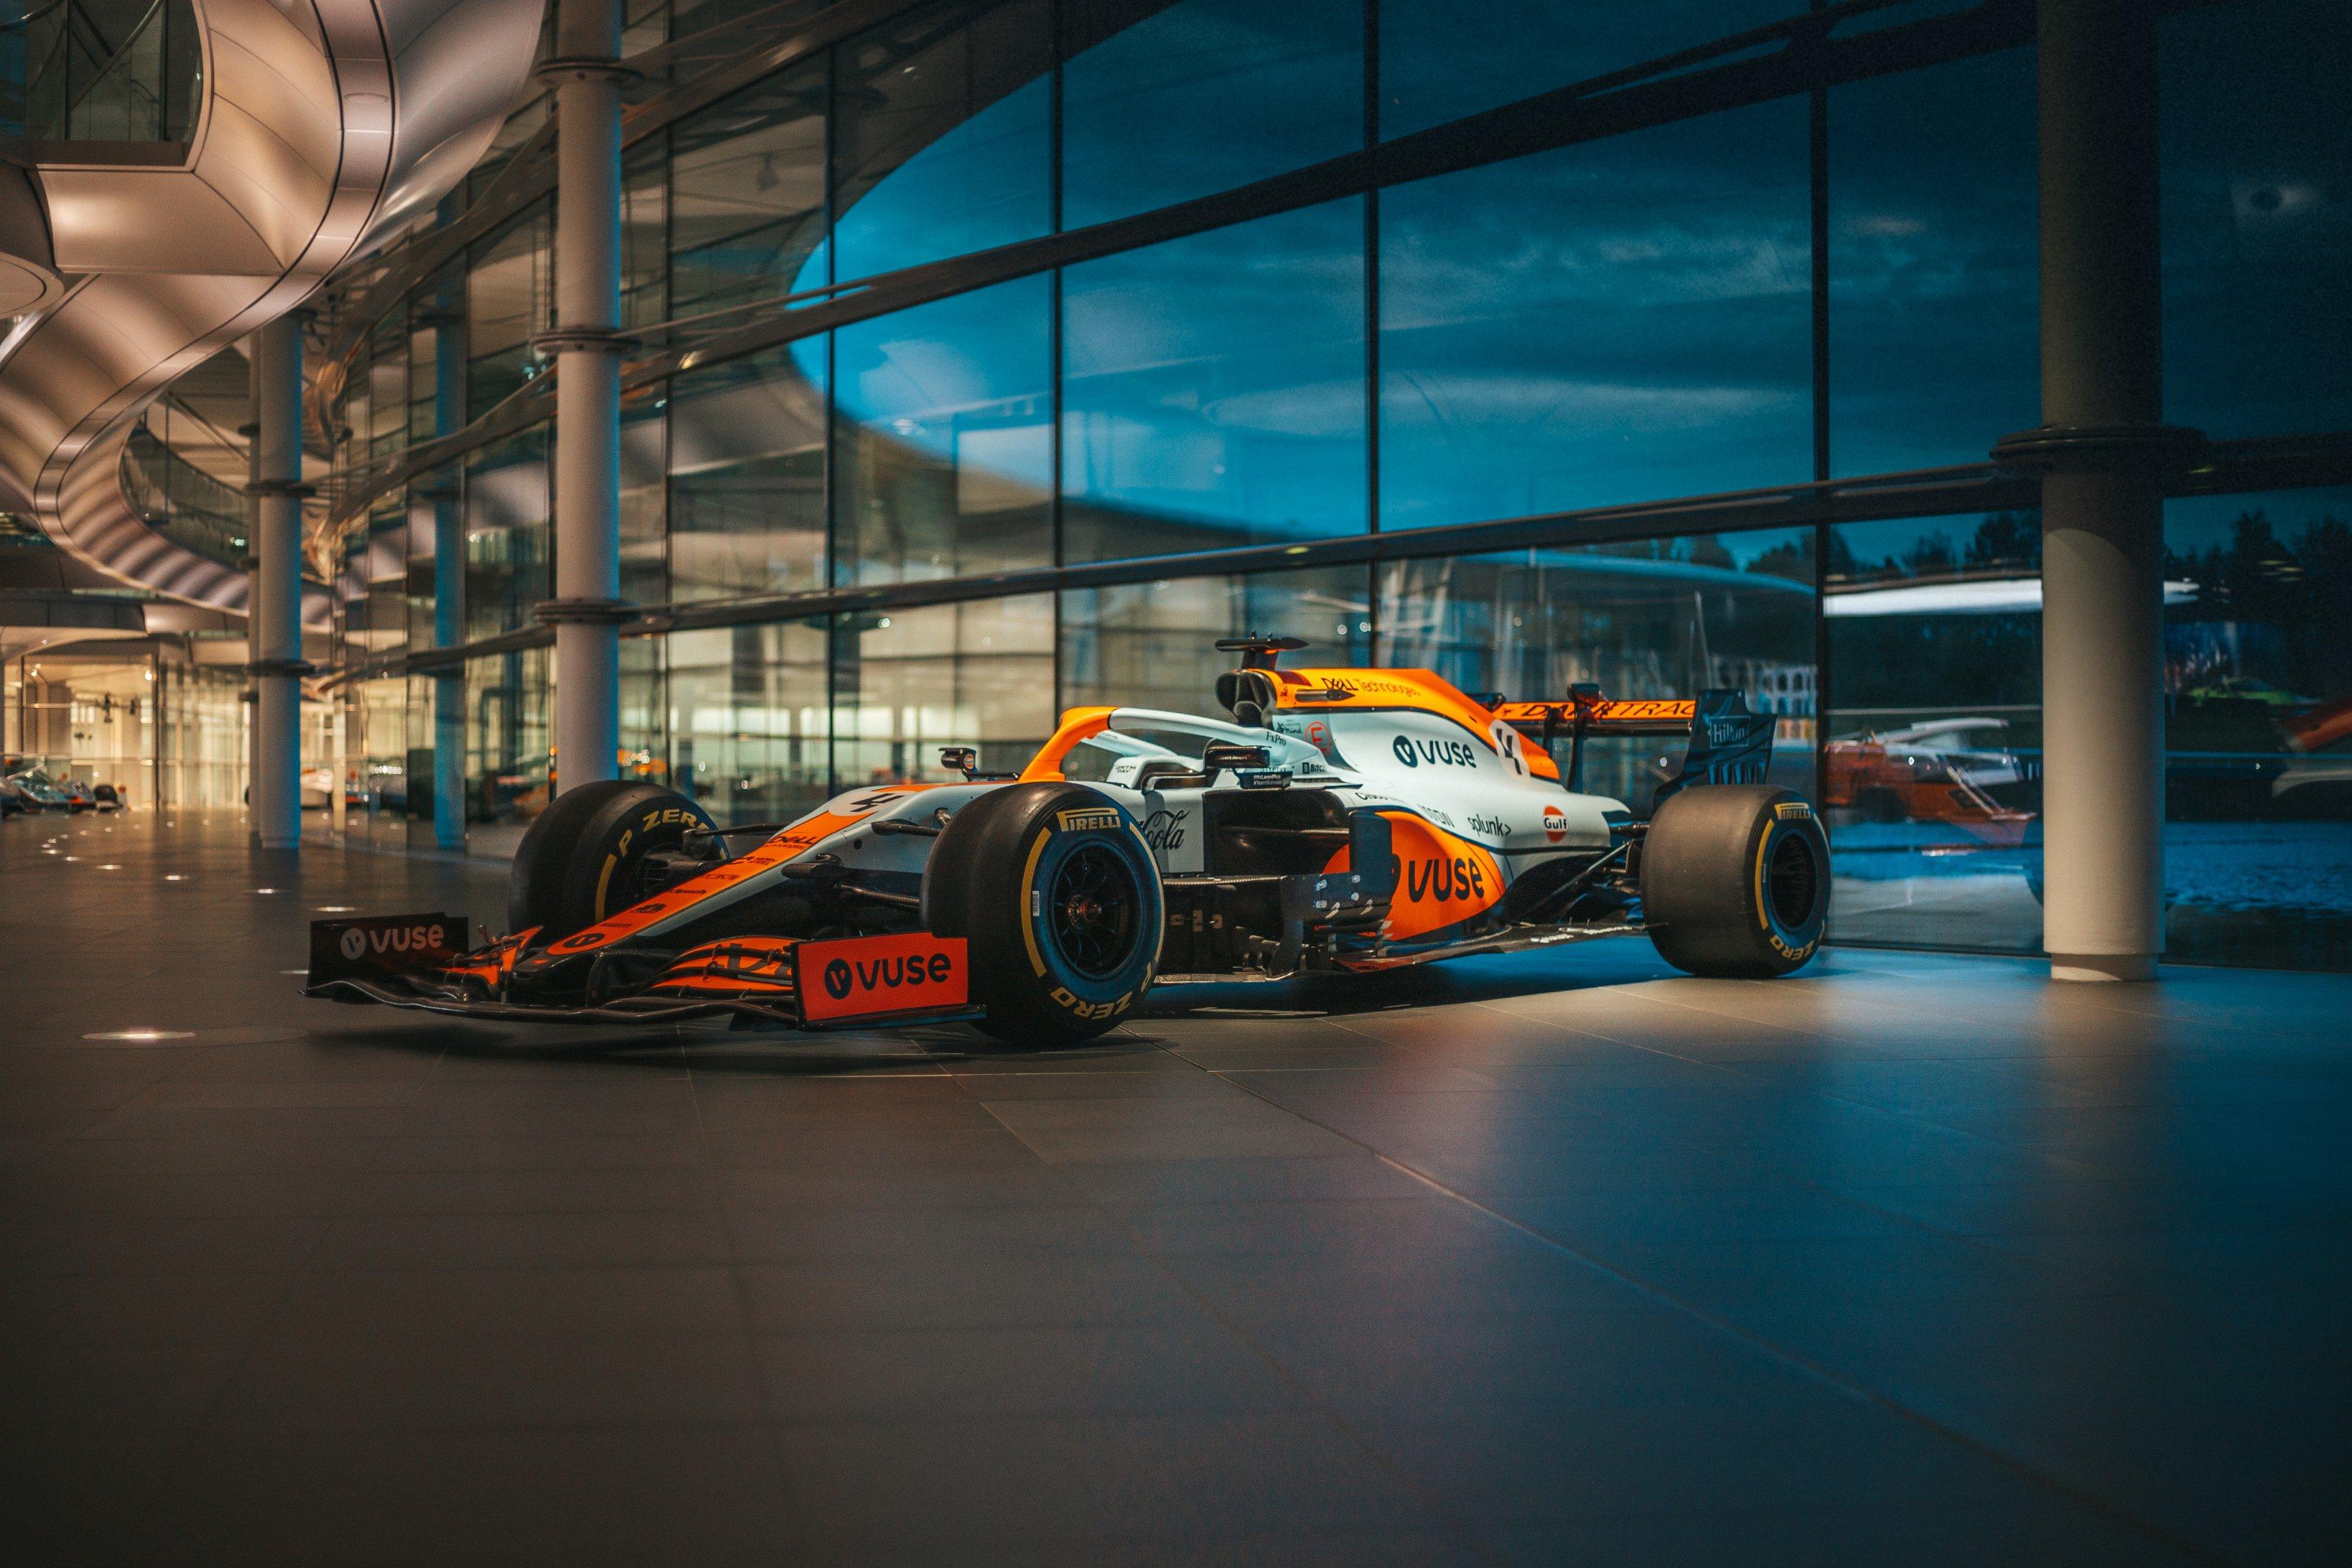 McLaren to run oneoff Gulf Oil livery at 2021 Monaco GP  Autocar India